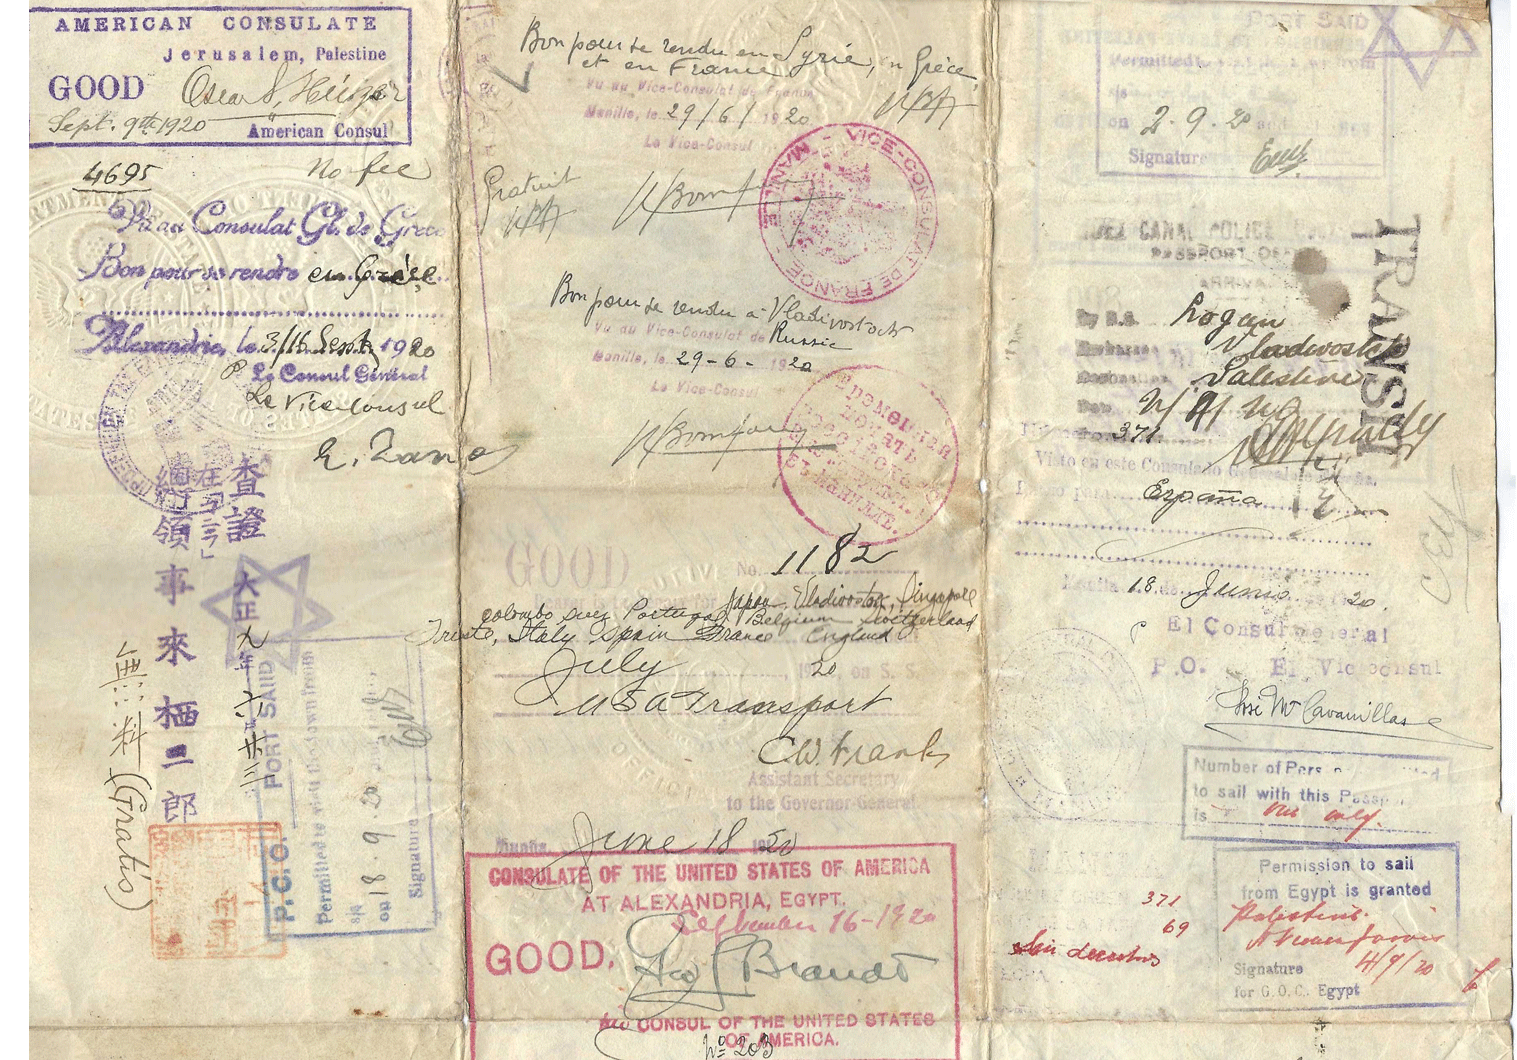 WWI Special passport